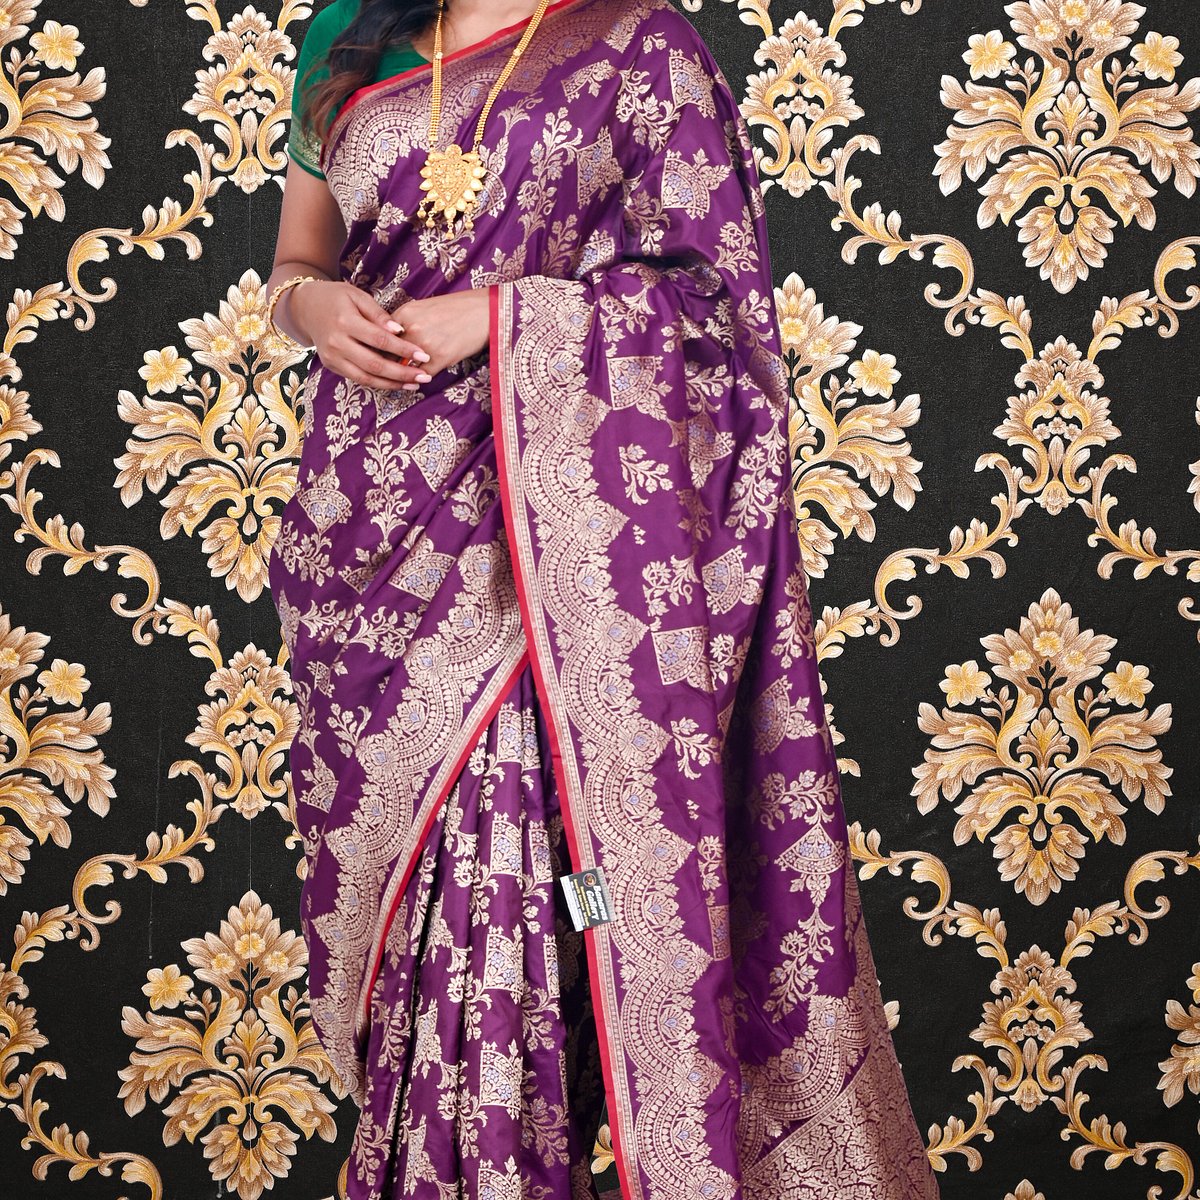 Мода absolute. Сари Индия. Сари (женская одежда в Индии). Сари платье Индии. Сари индийское богатое.